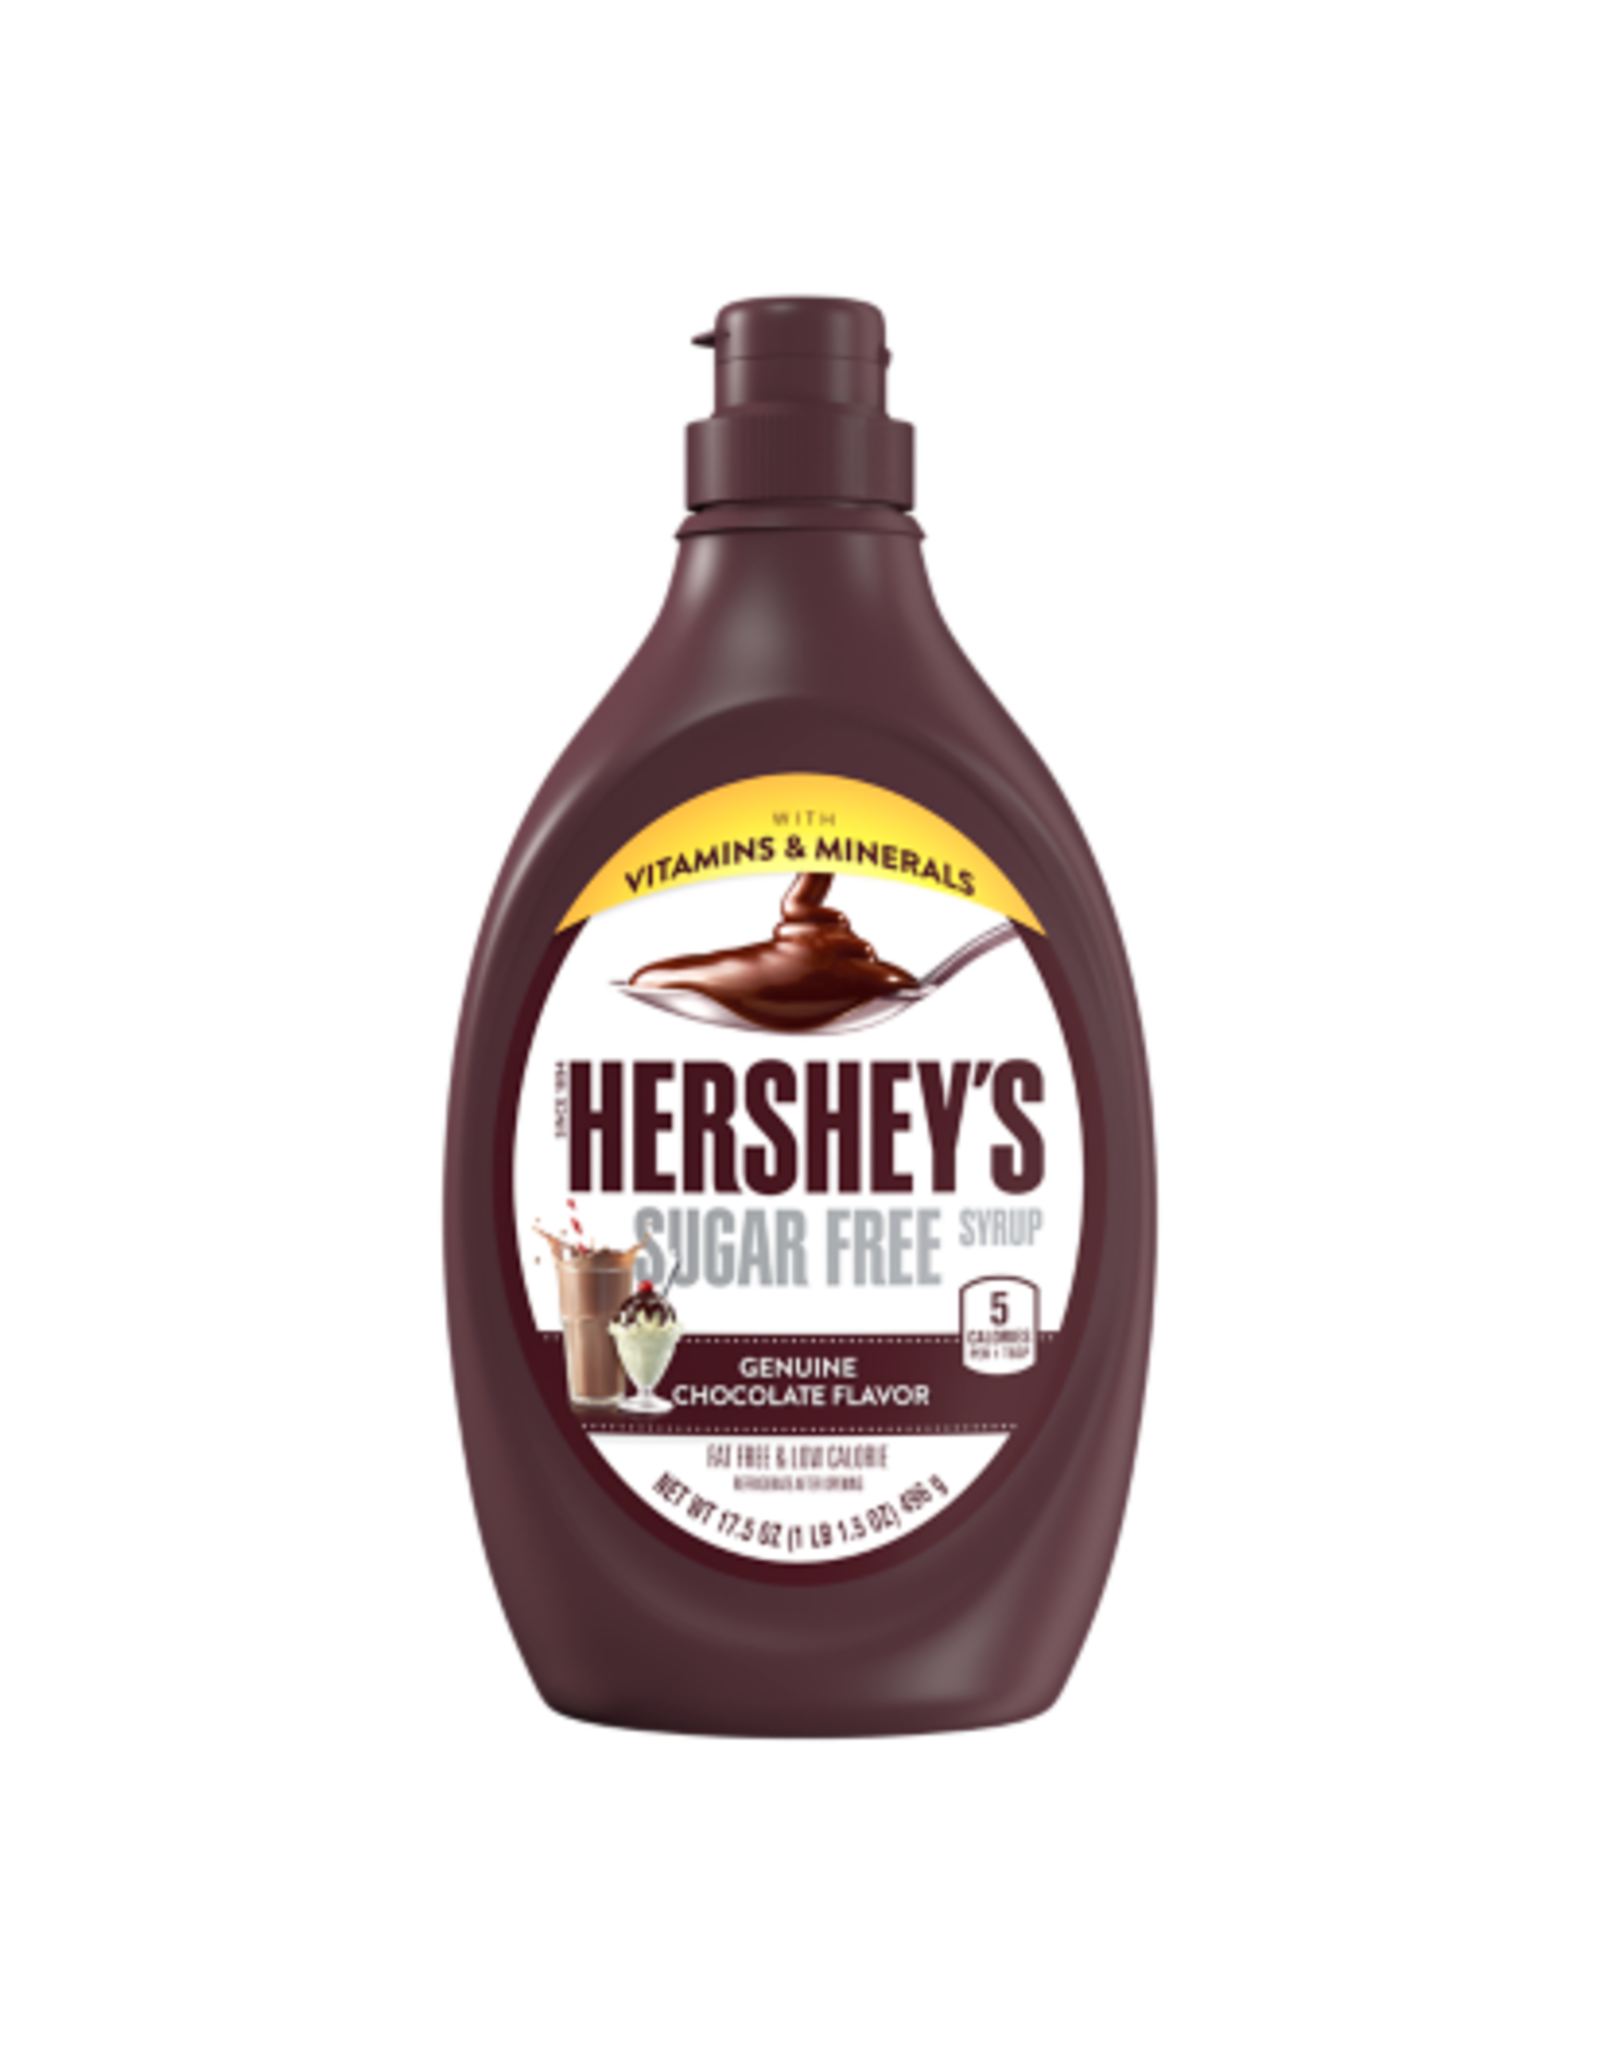 Hershey's Chocolate Syrup Sugar Free